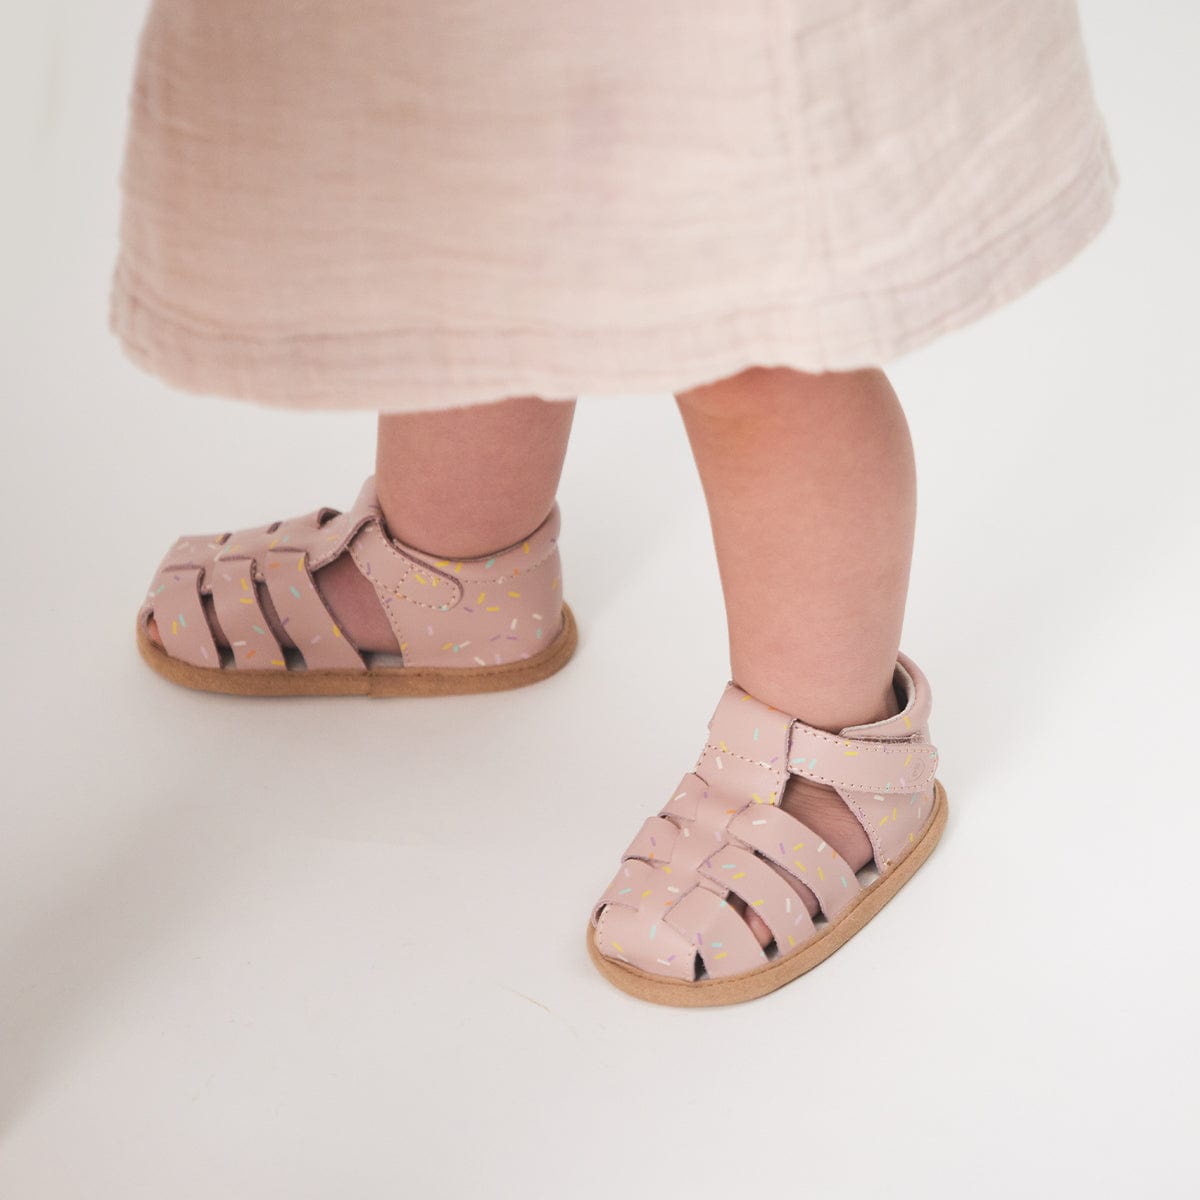 Pretty Brave Baby Shoes Rio Sandal in Sprinkles